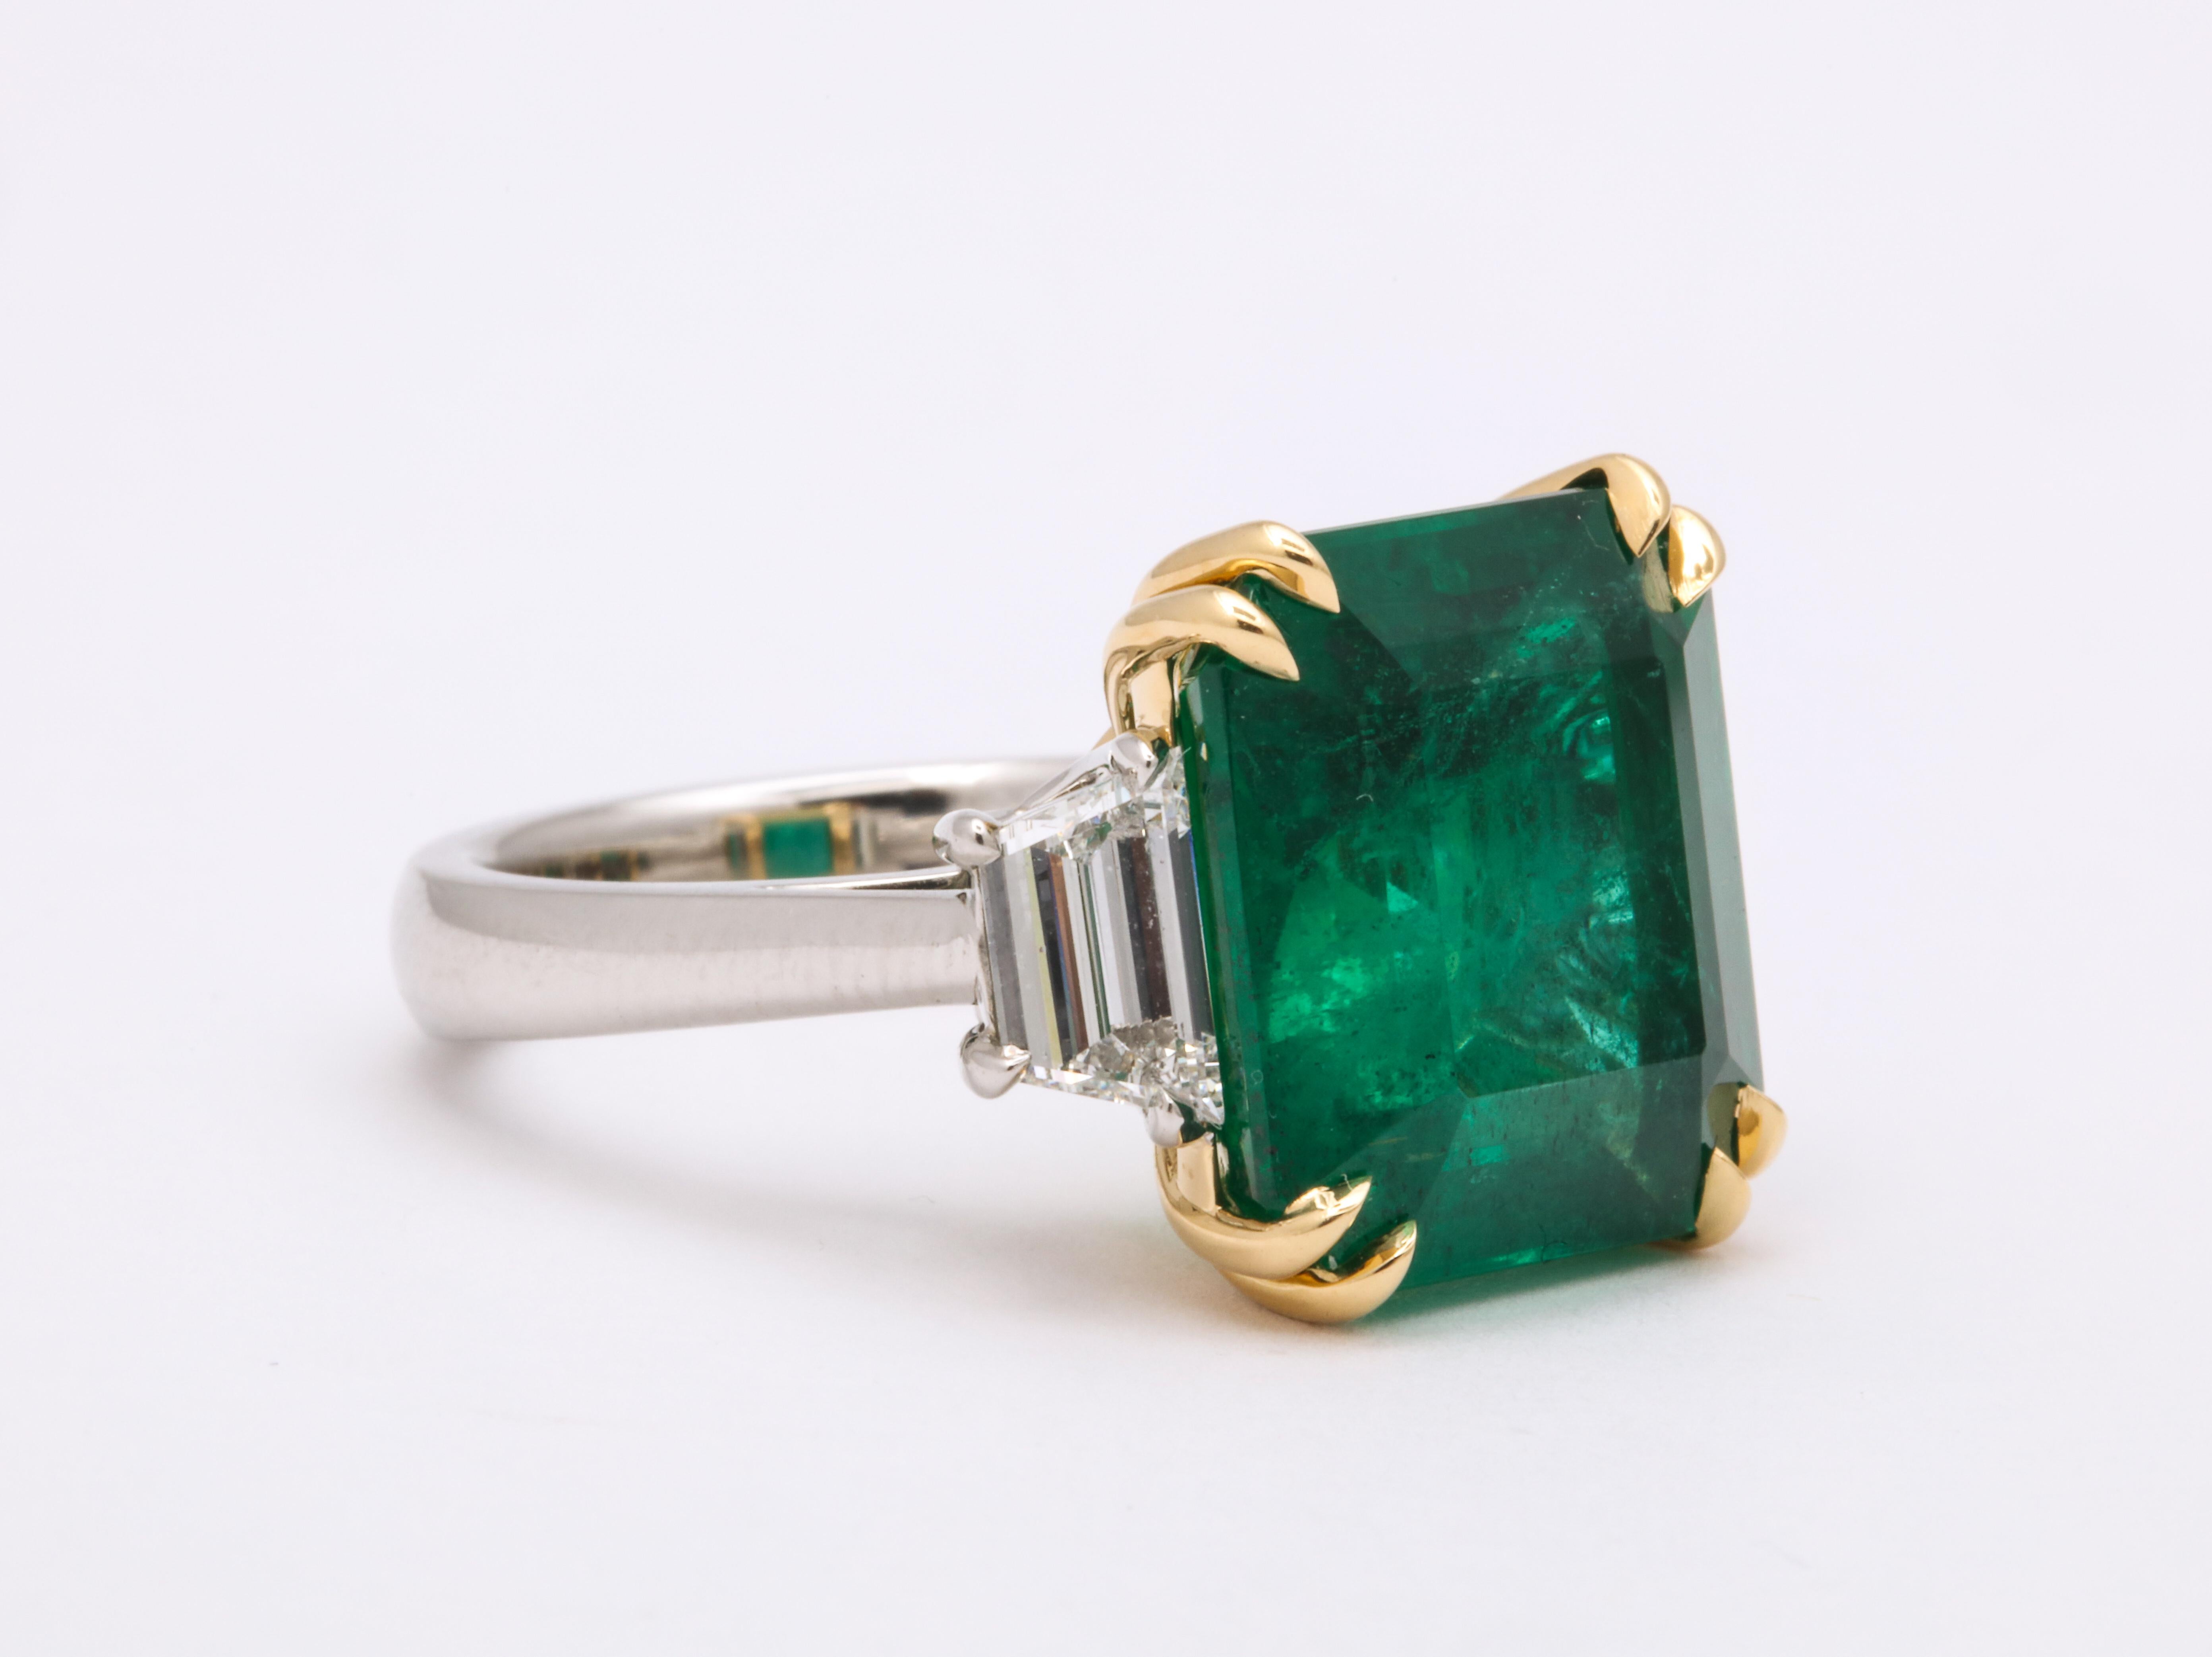 Emerald Cut 10 Carat Emerald and Diamond Ring